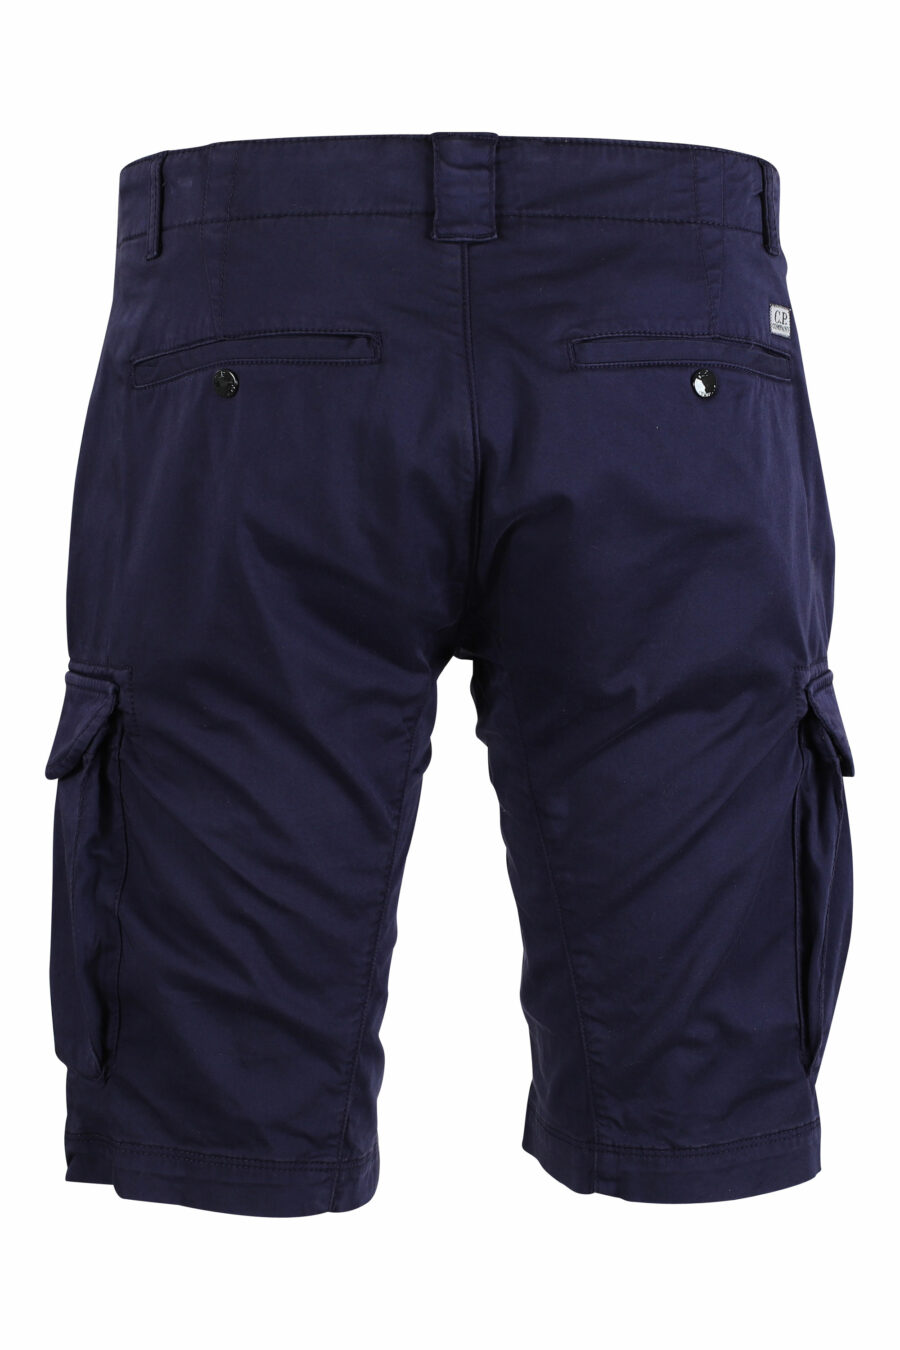 Dunkelblaue Cargo-Shorts mit rundem Mini-Logo - IMG 9492